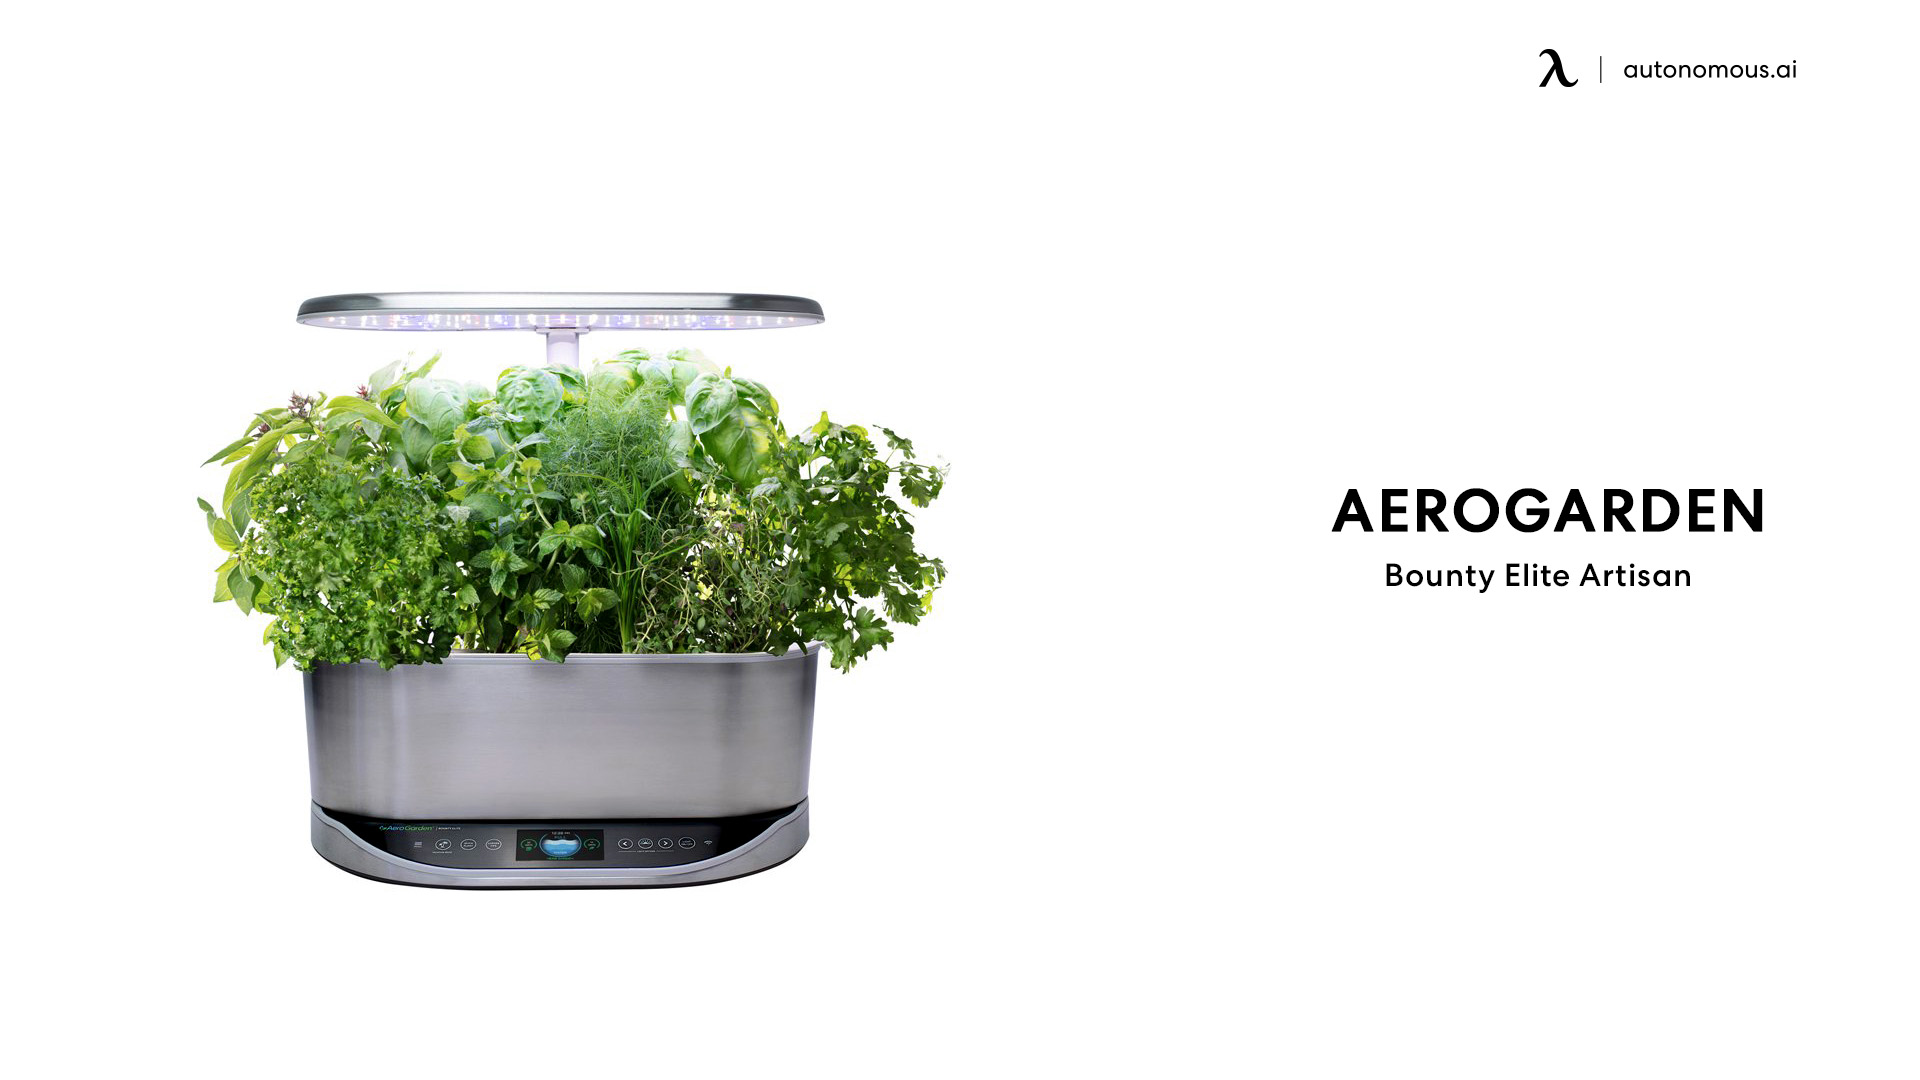 Aerogarden Bounty Elite Artisan smart garden